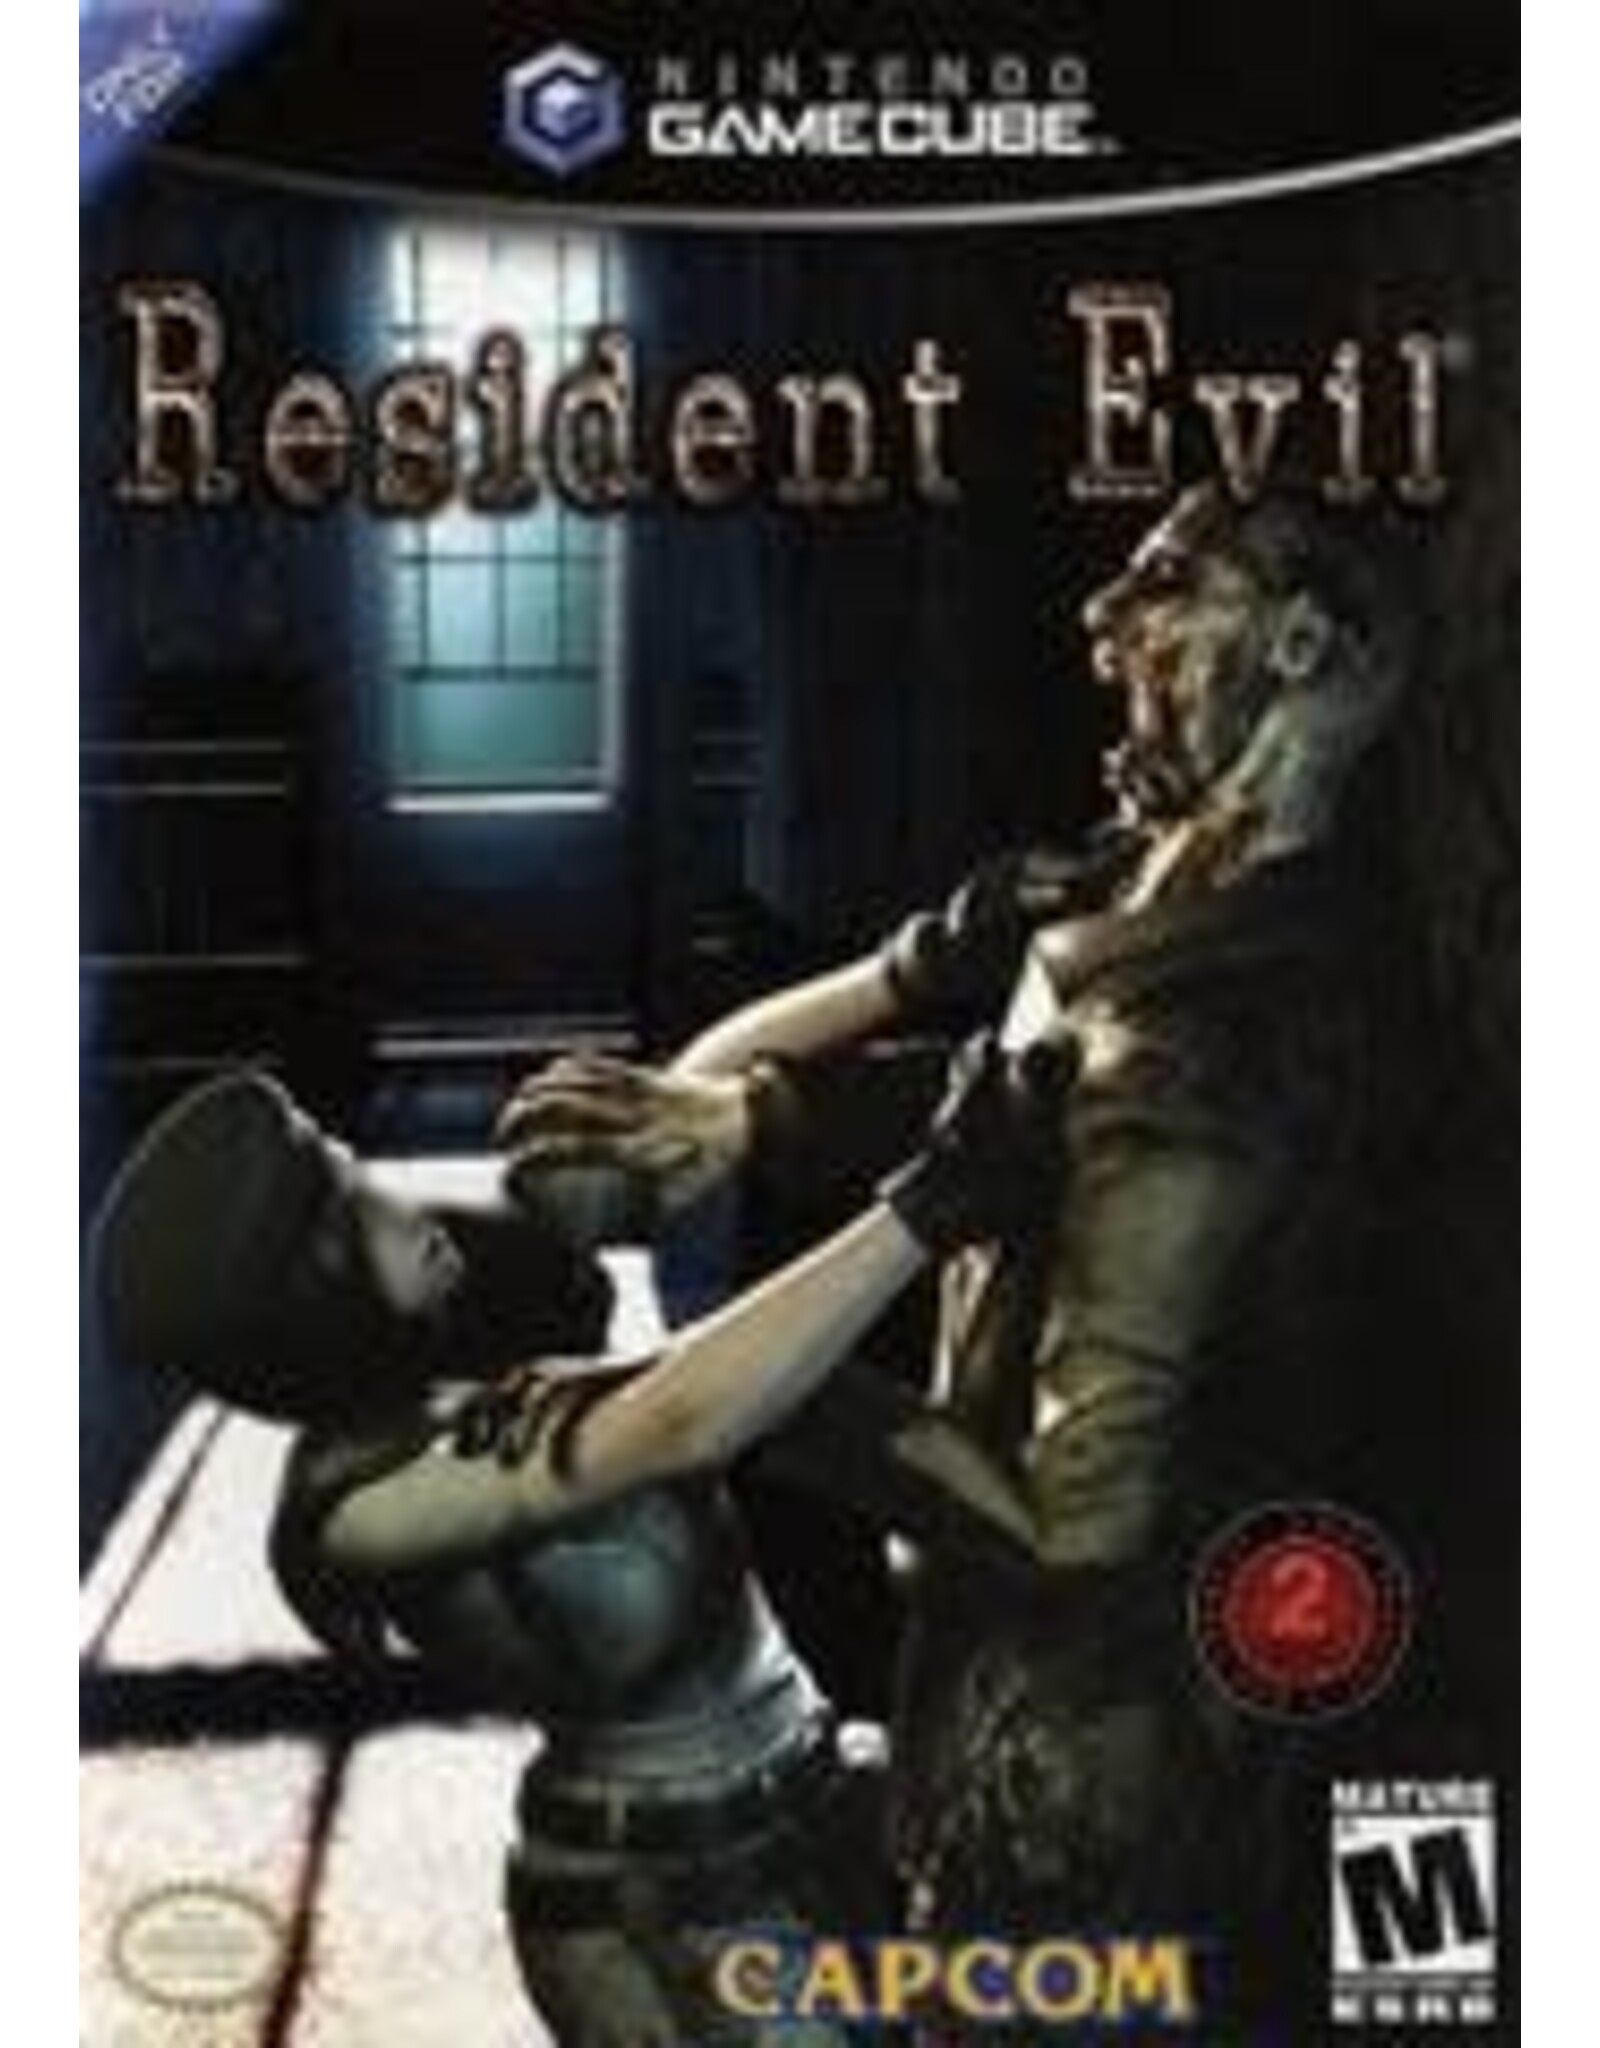 Gamecube Resident Evil (No Manual)